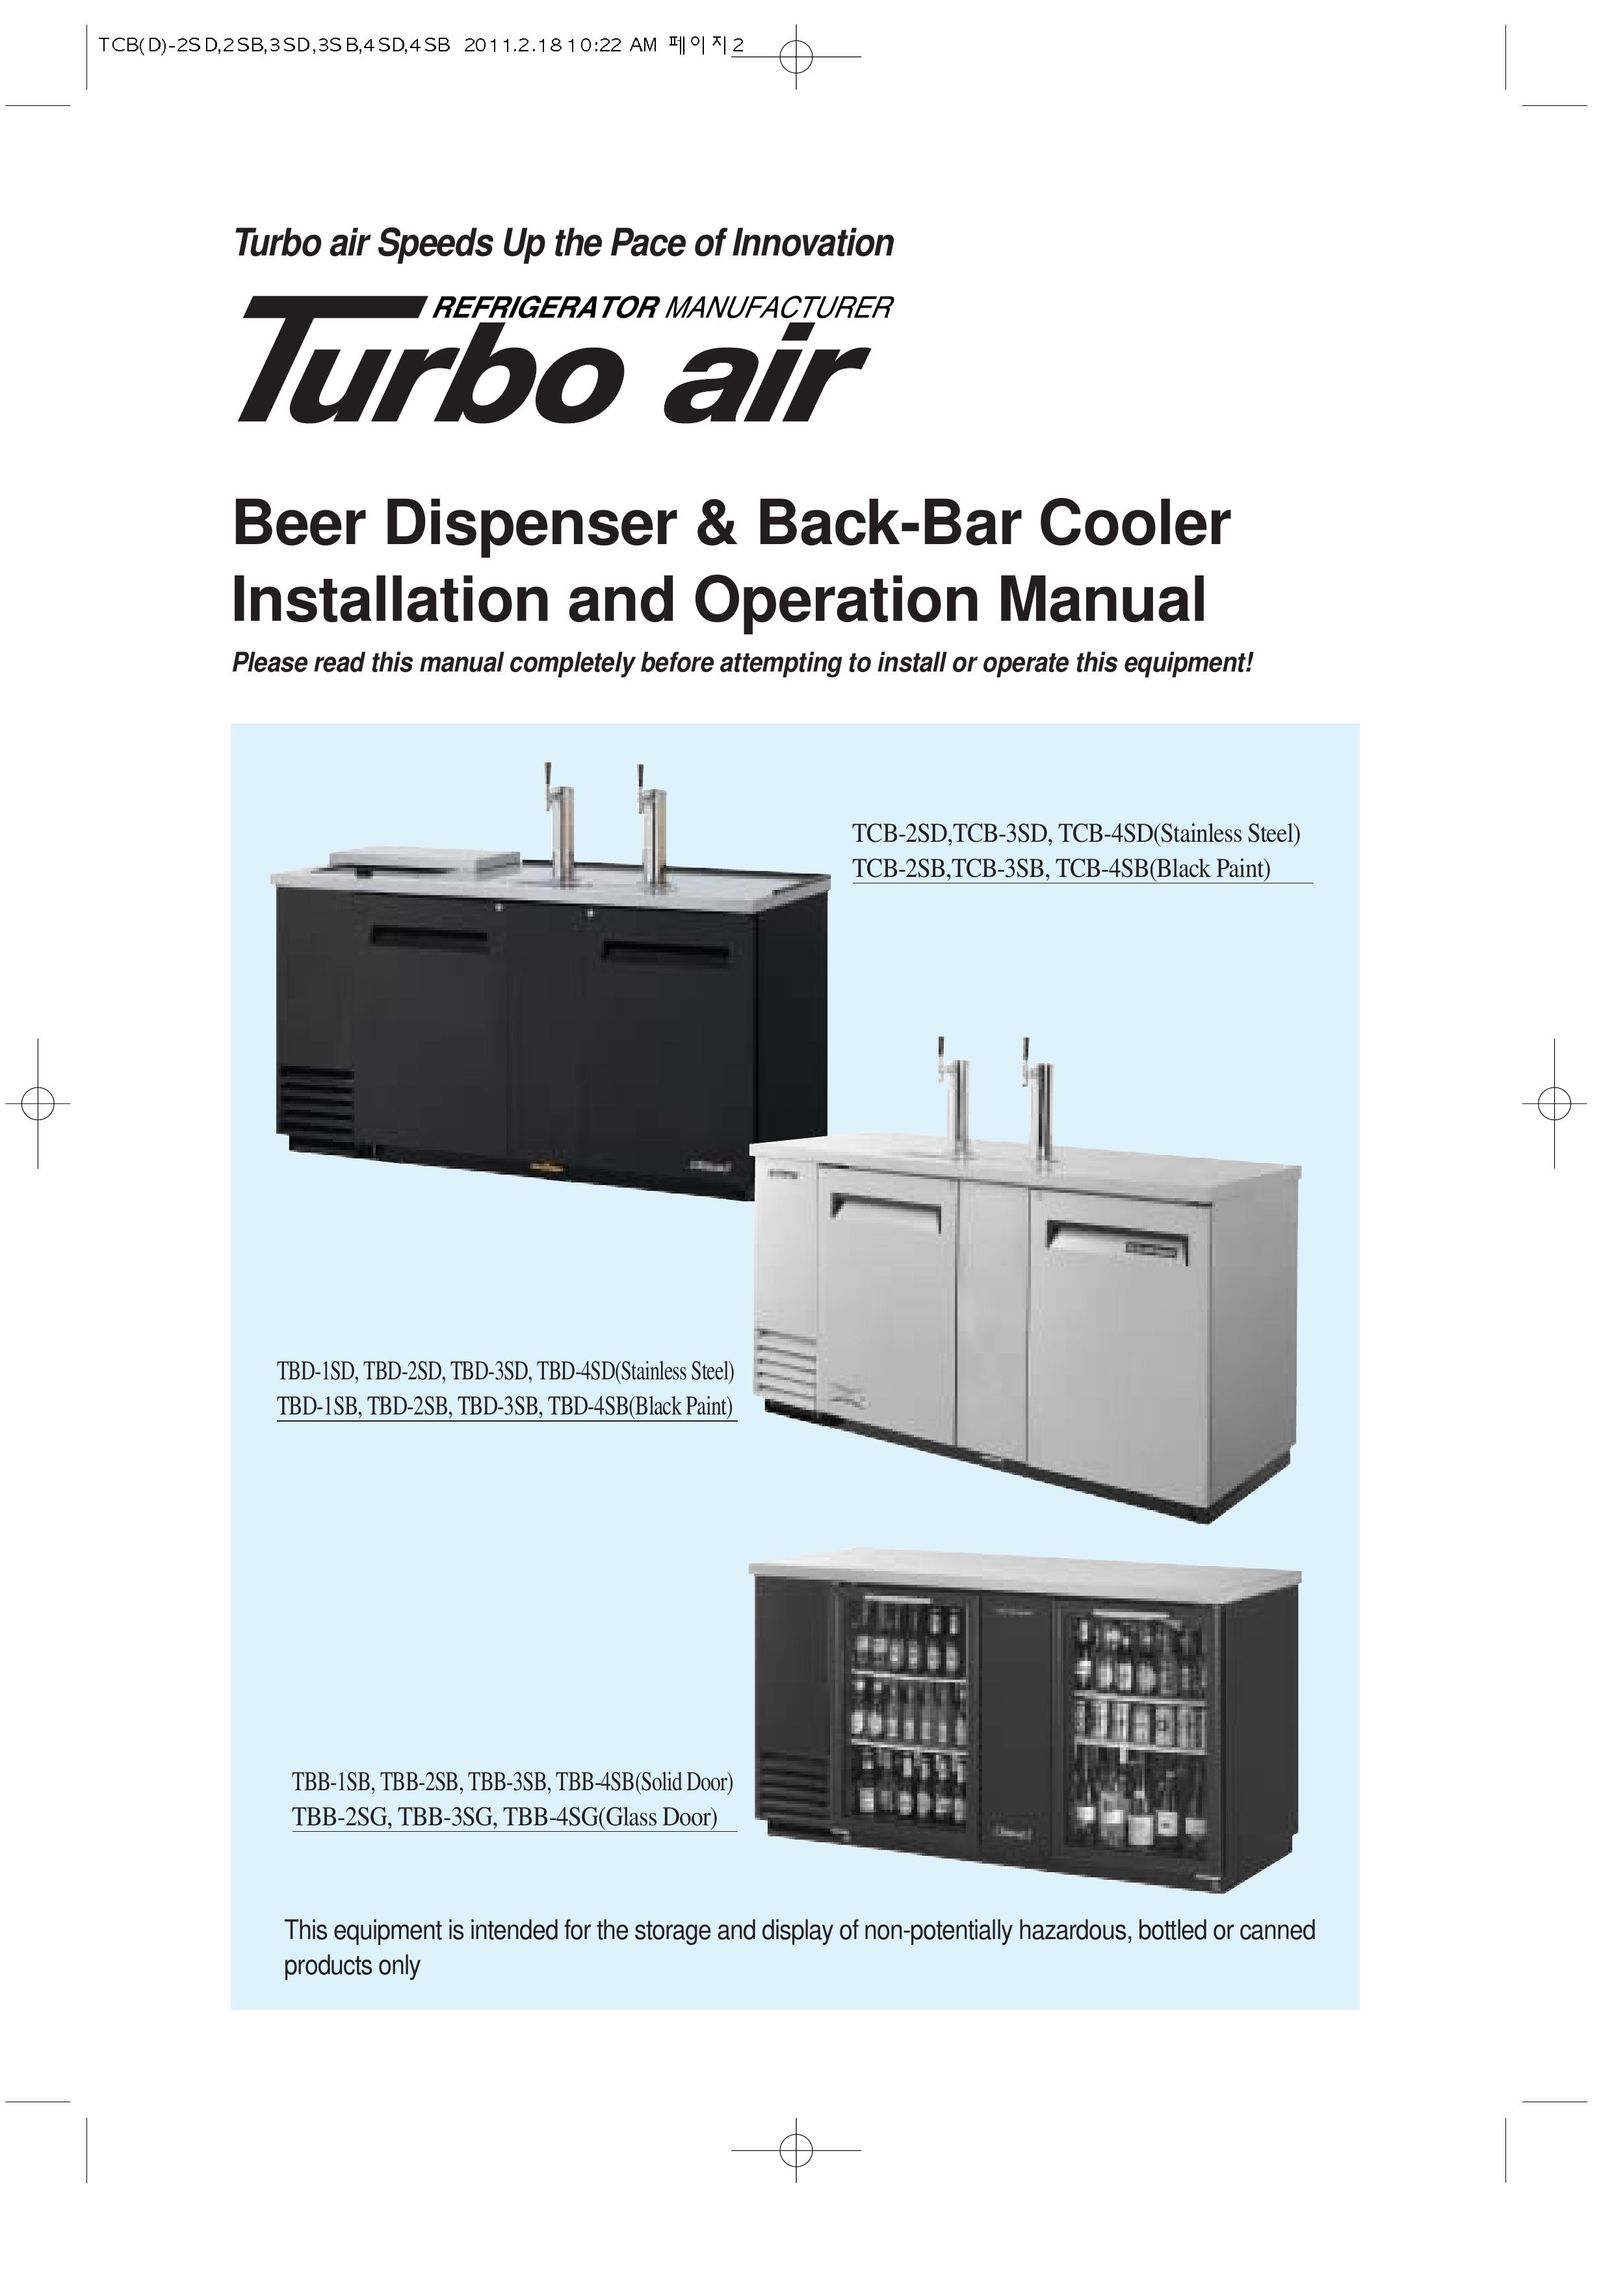 Turbo Air TCB-2SD Beverage Dispenser User Manual